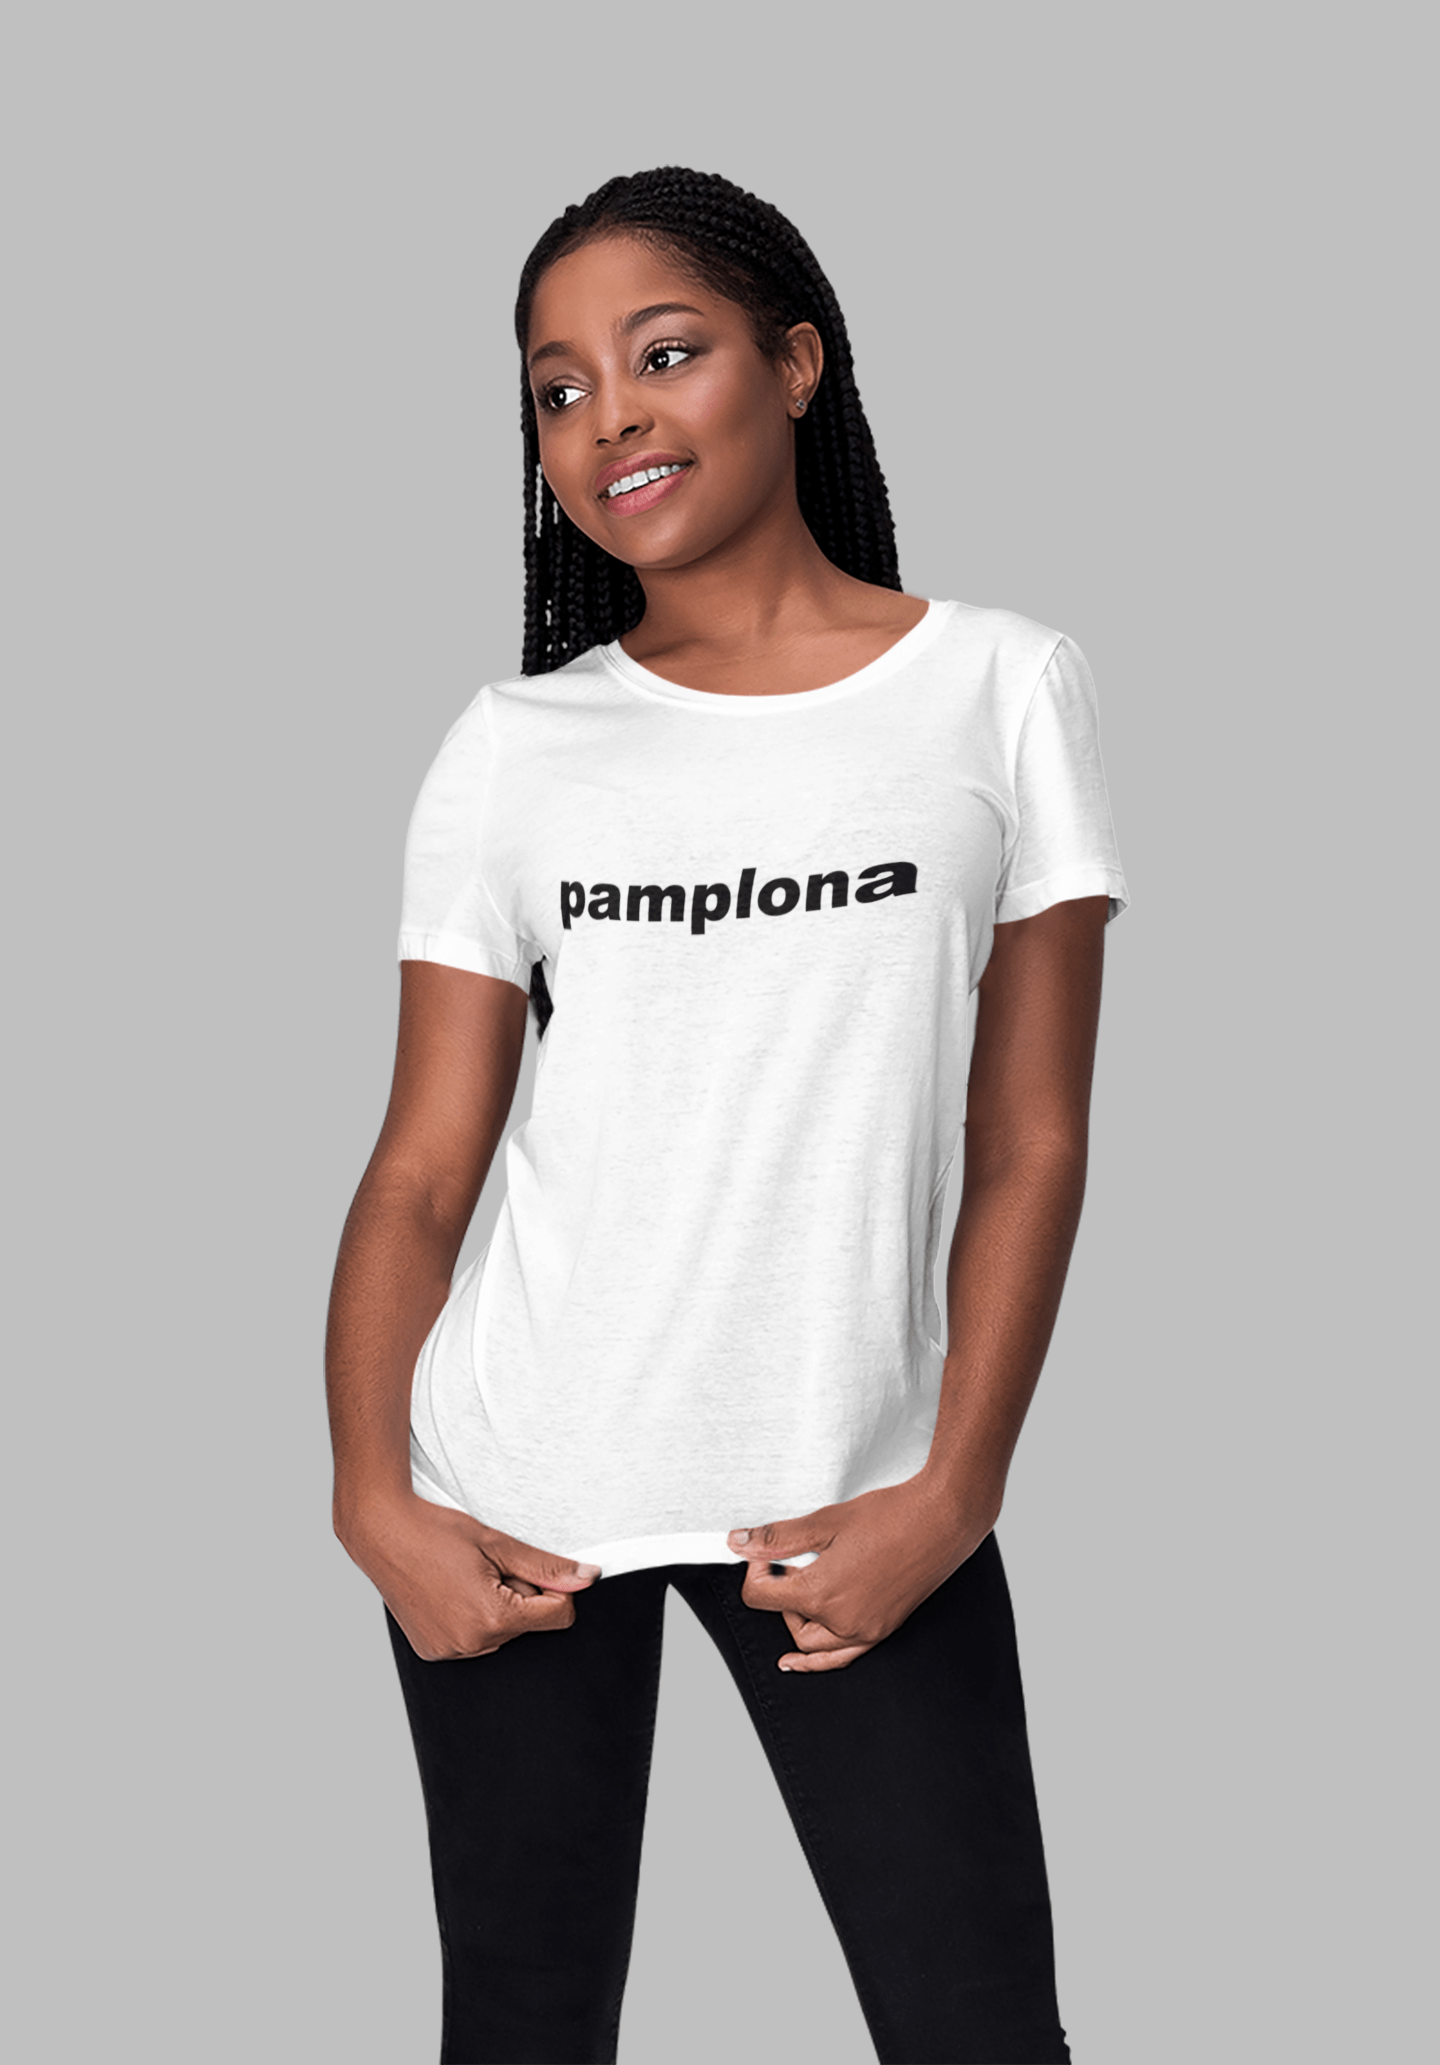 Pamplona Tourist Attraction Damen Kurzarm-T-Shirt mit Rundhalsausschnitt 00072